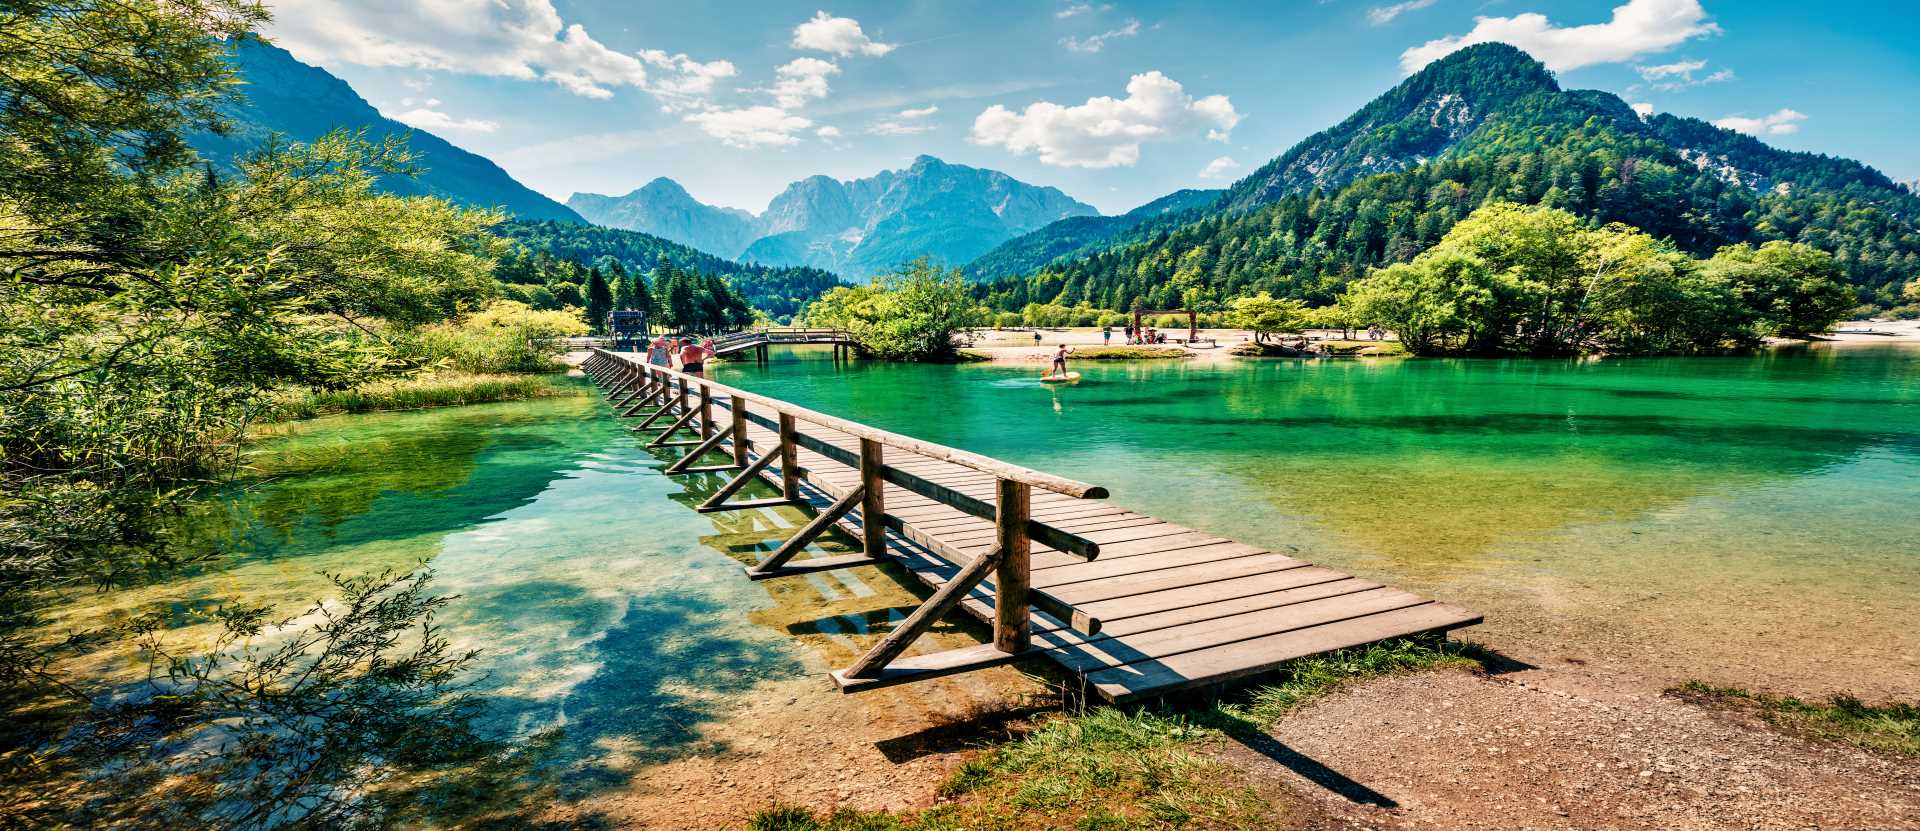 Lago Jasna, Alpes Julianos, Parque Nacional de Triglav, Gozd Martuljek, Eslovenia - Campings en Eslovenia